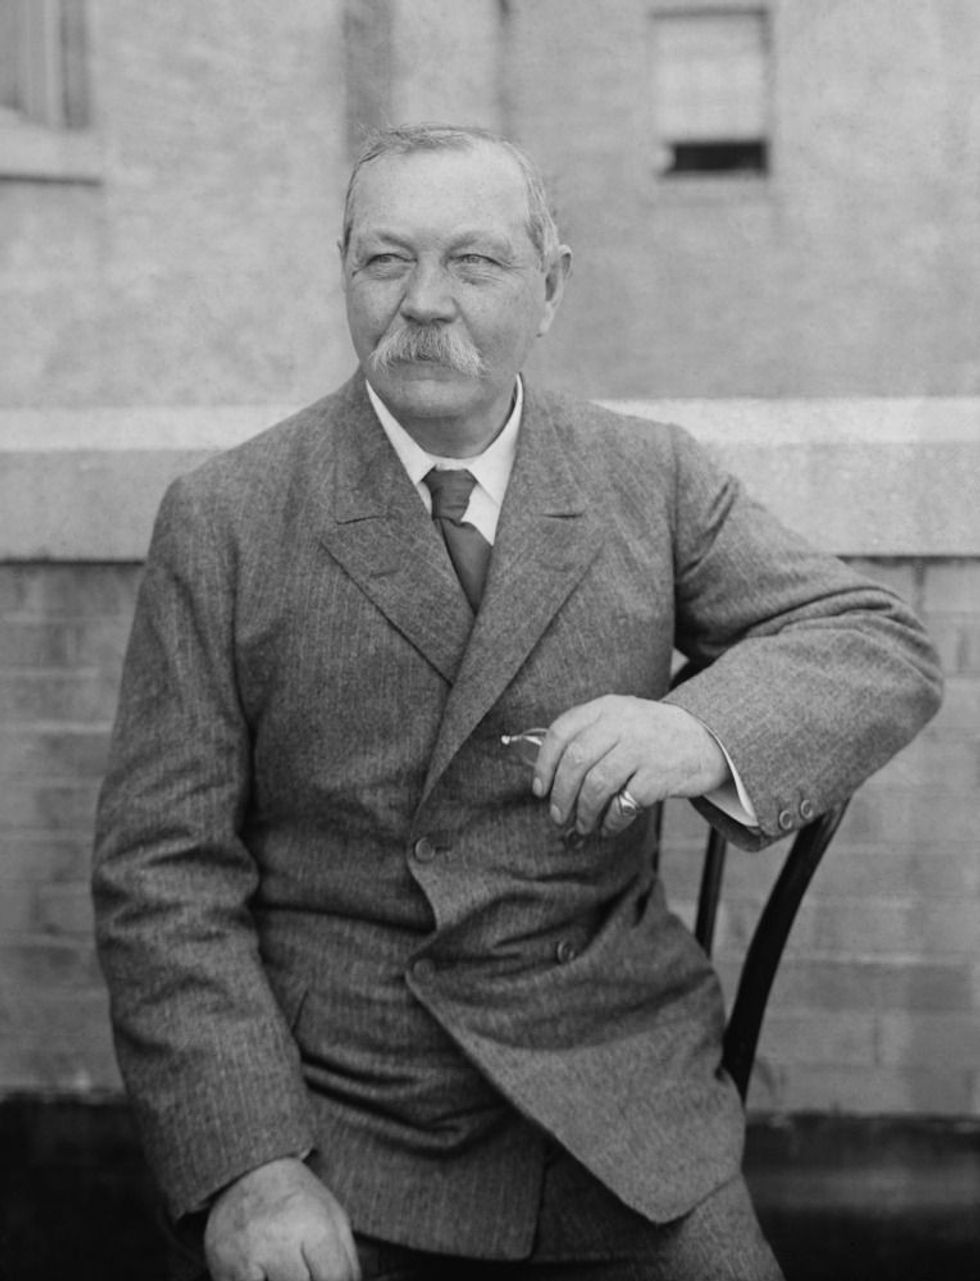 Arthur Conan Doyle, a Scotch-Irish writer created the fictional detective Sherlock Holmes.